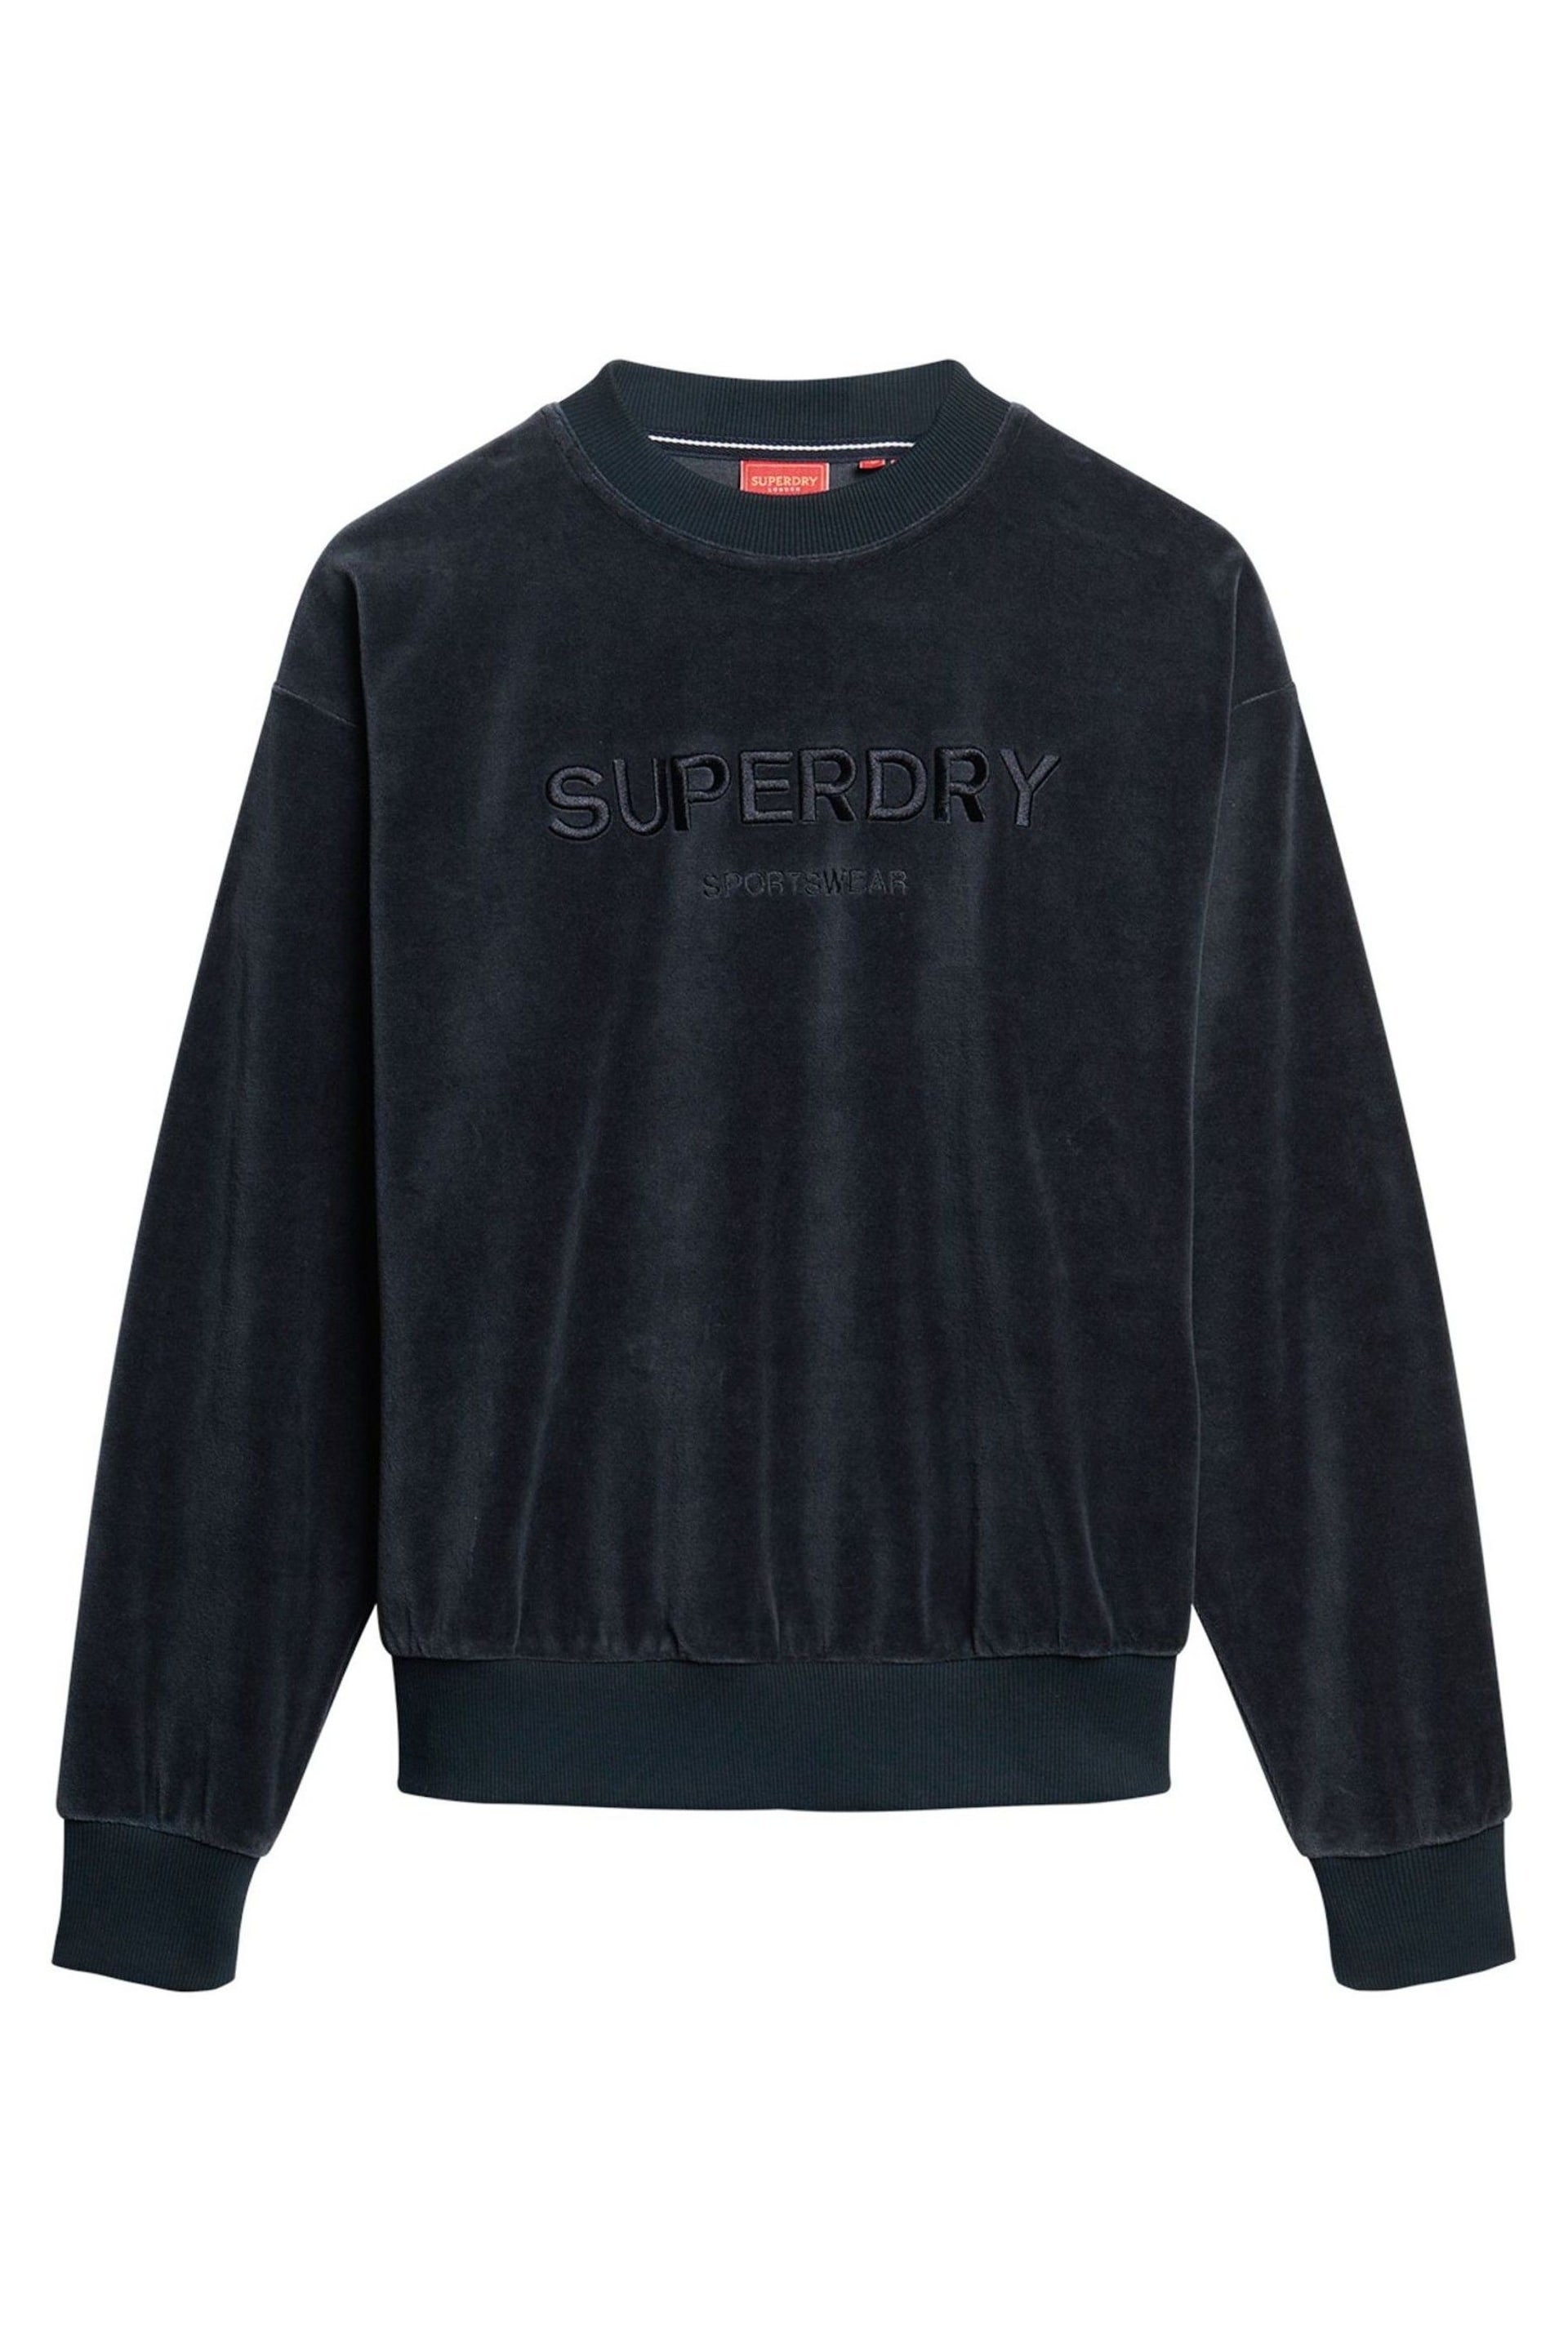 SUPERDRY Blue SUPERDRY Velour Graphic Boxy Crew Sweatshirt - Image 4 of 6